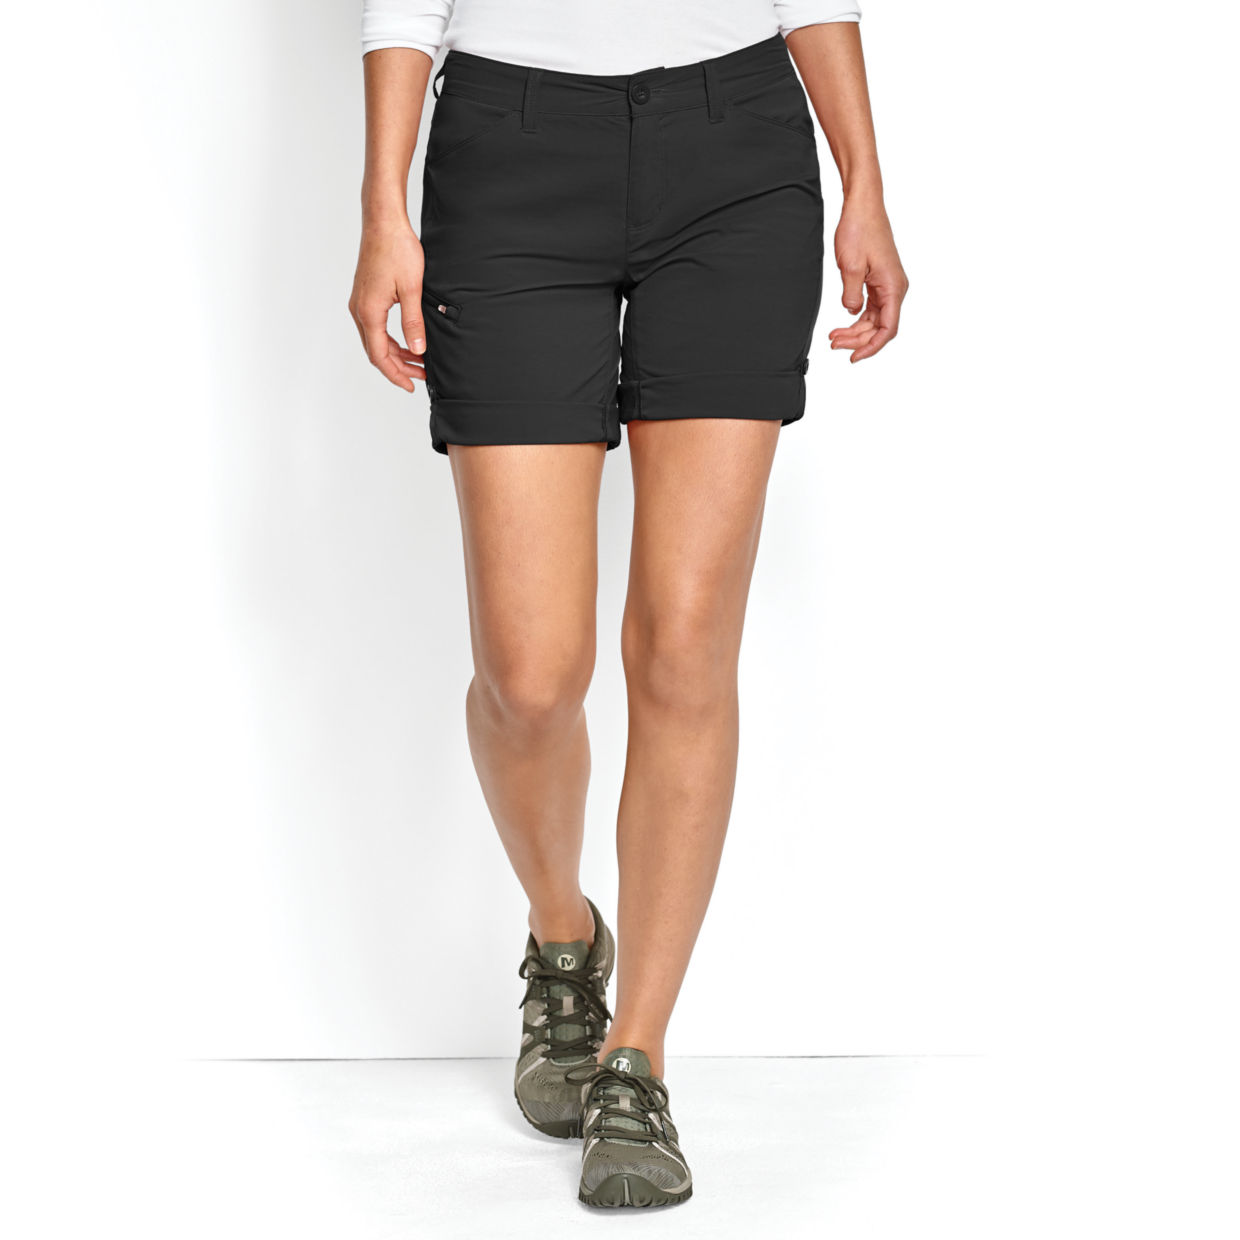 Jackson Quick-Dry Natural Fit Convertible 8 1/2" Shorts 